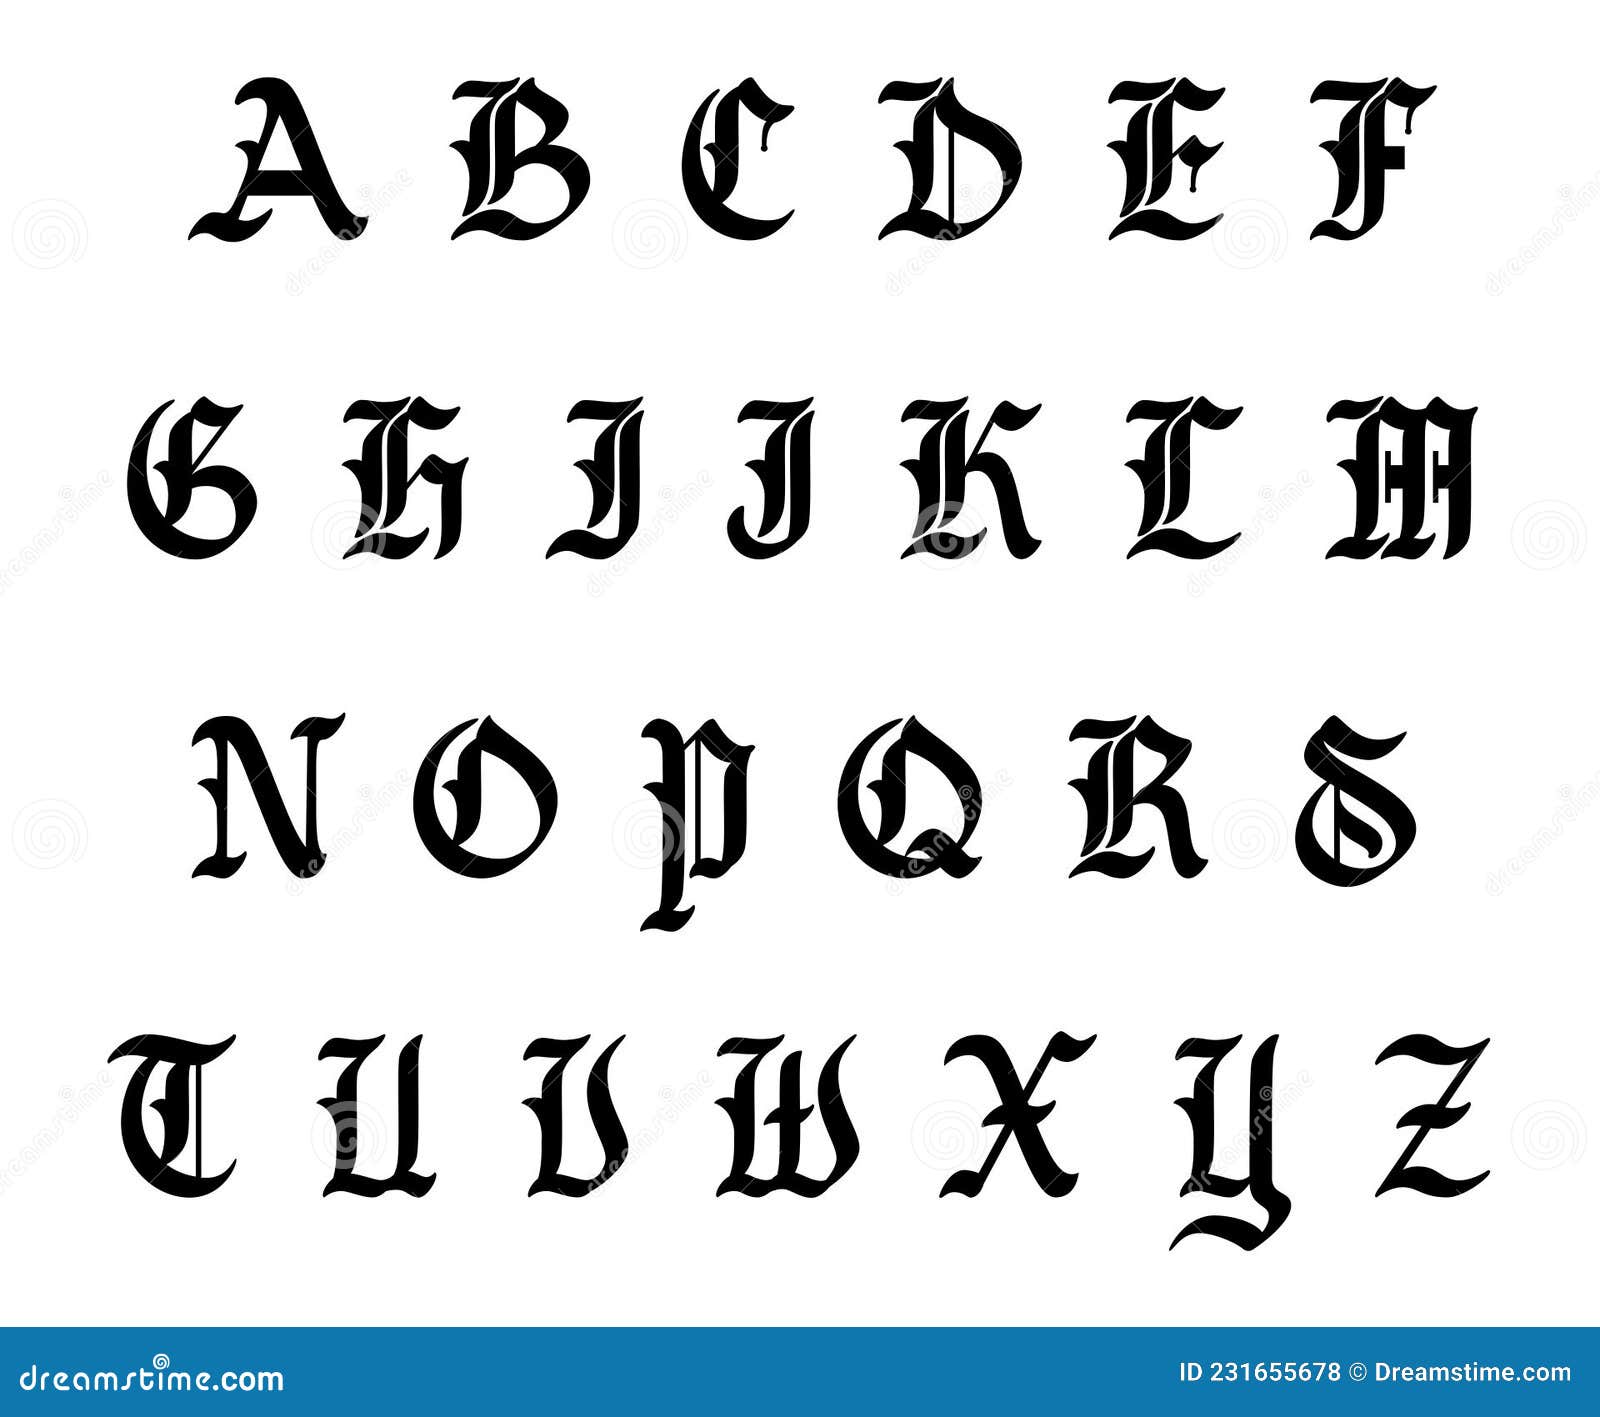 Old English letters stock illustration. Illustration of alphabet ...